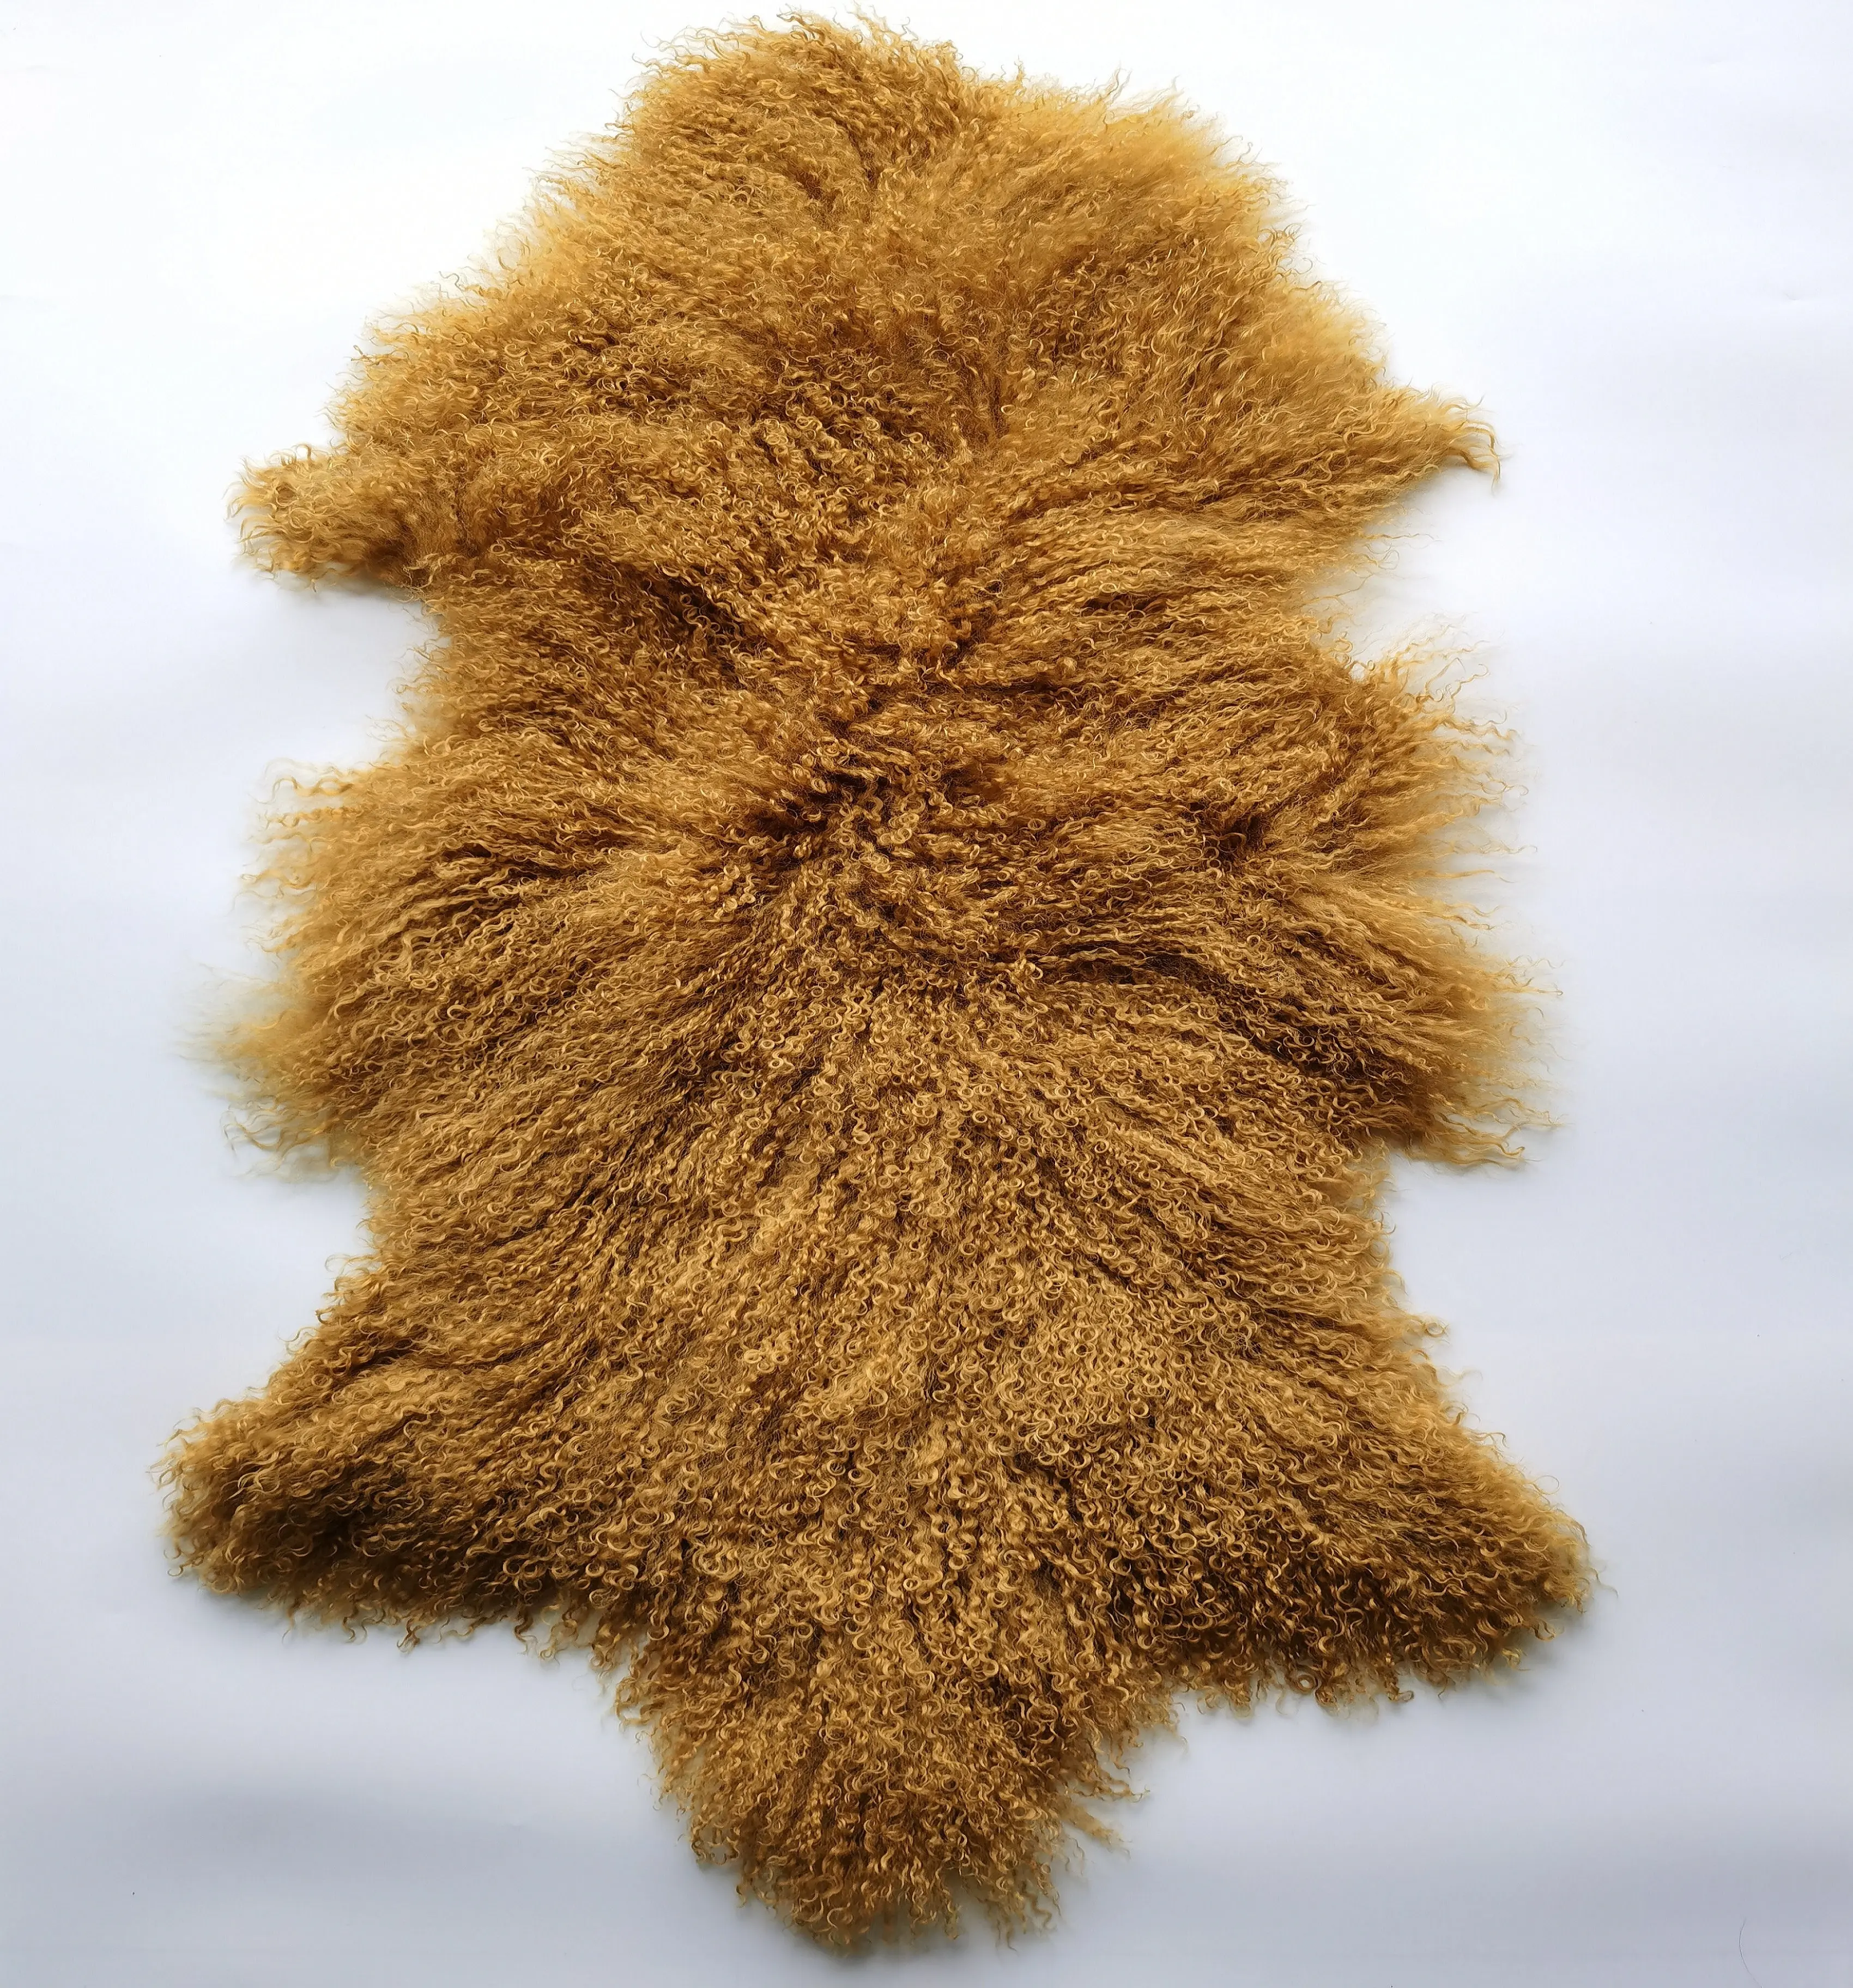 Manta de piel de oveja mongola tibetana, Pelt de pelo rizado Natural, color Beige, color gris, plato de longitud de piel Natural, 7-15 días